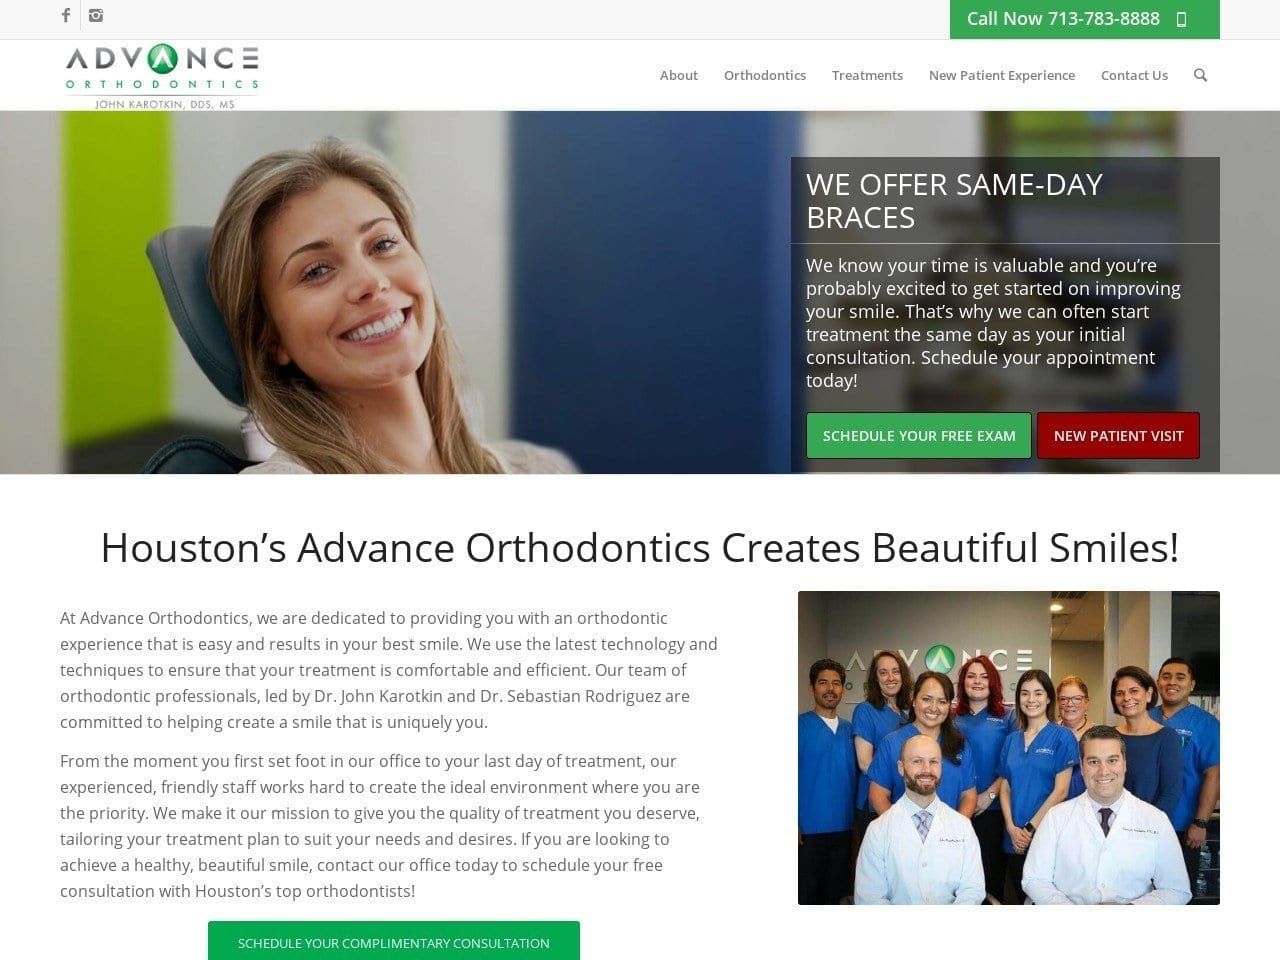 Advance Orthodontics Website Screenshot from advanceorthodonticshouston.com